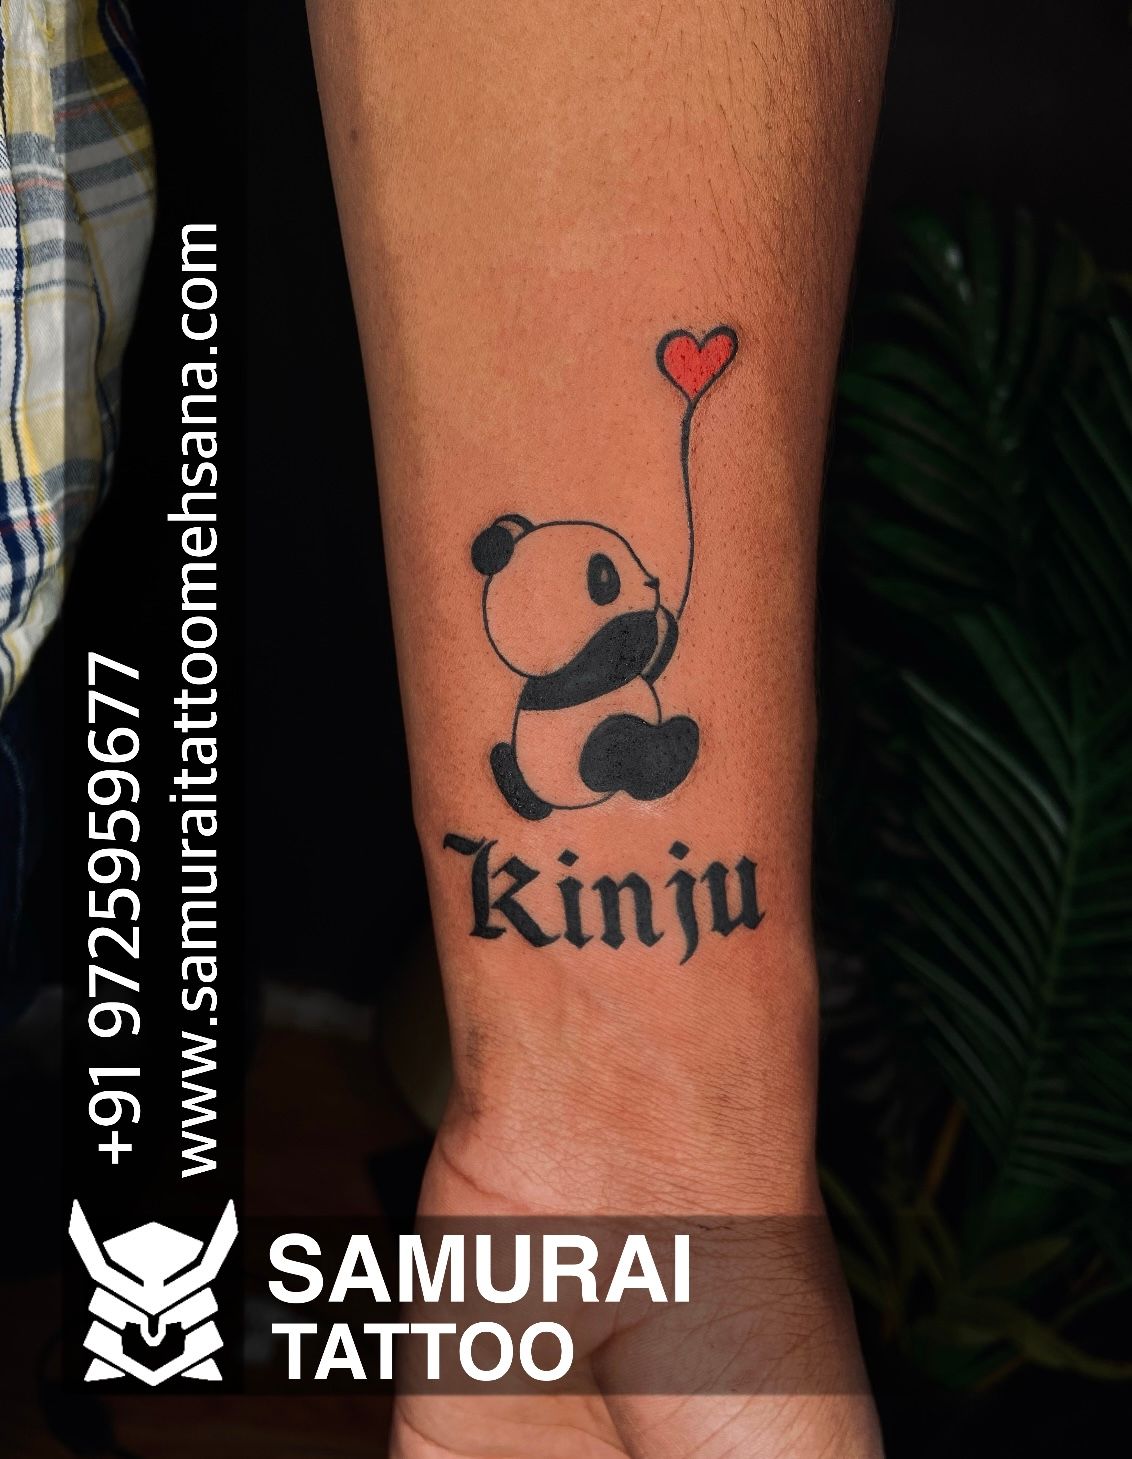 Premium Vector  Tattoo and t shirt design black and white hand drawn samurai  panda engraving ornament